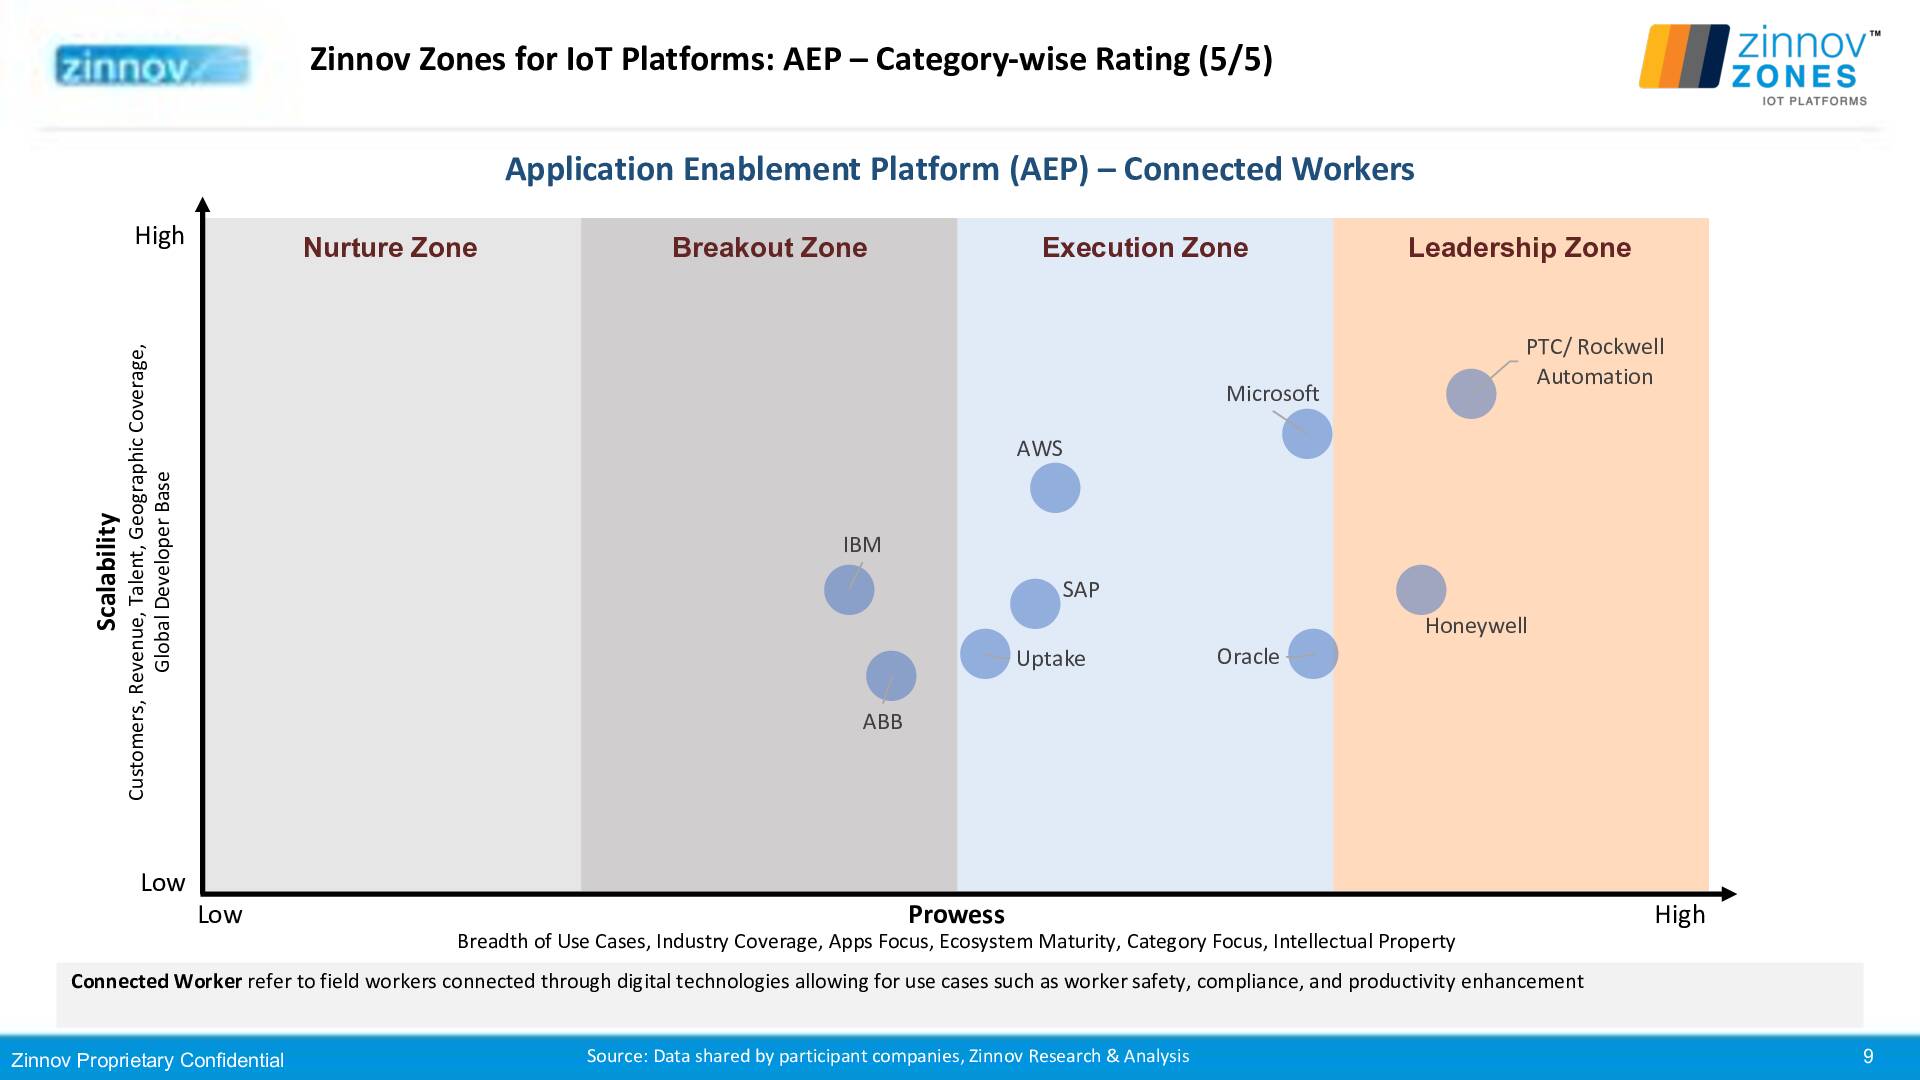 Zinnov Zones Iot Platform 2019 Ratings Revised 24sep20199